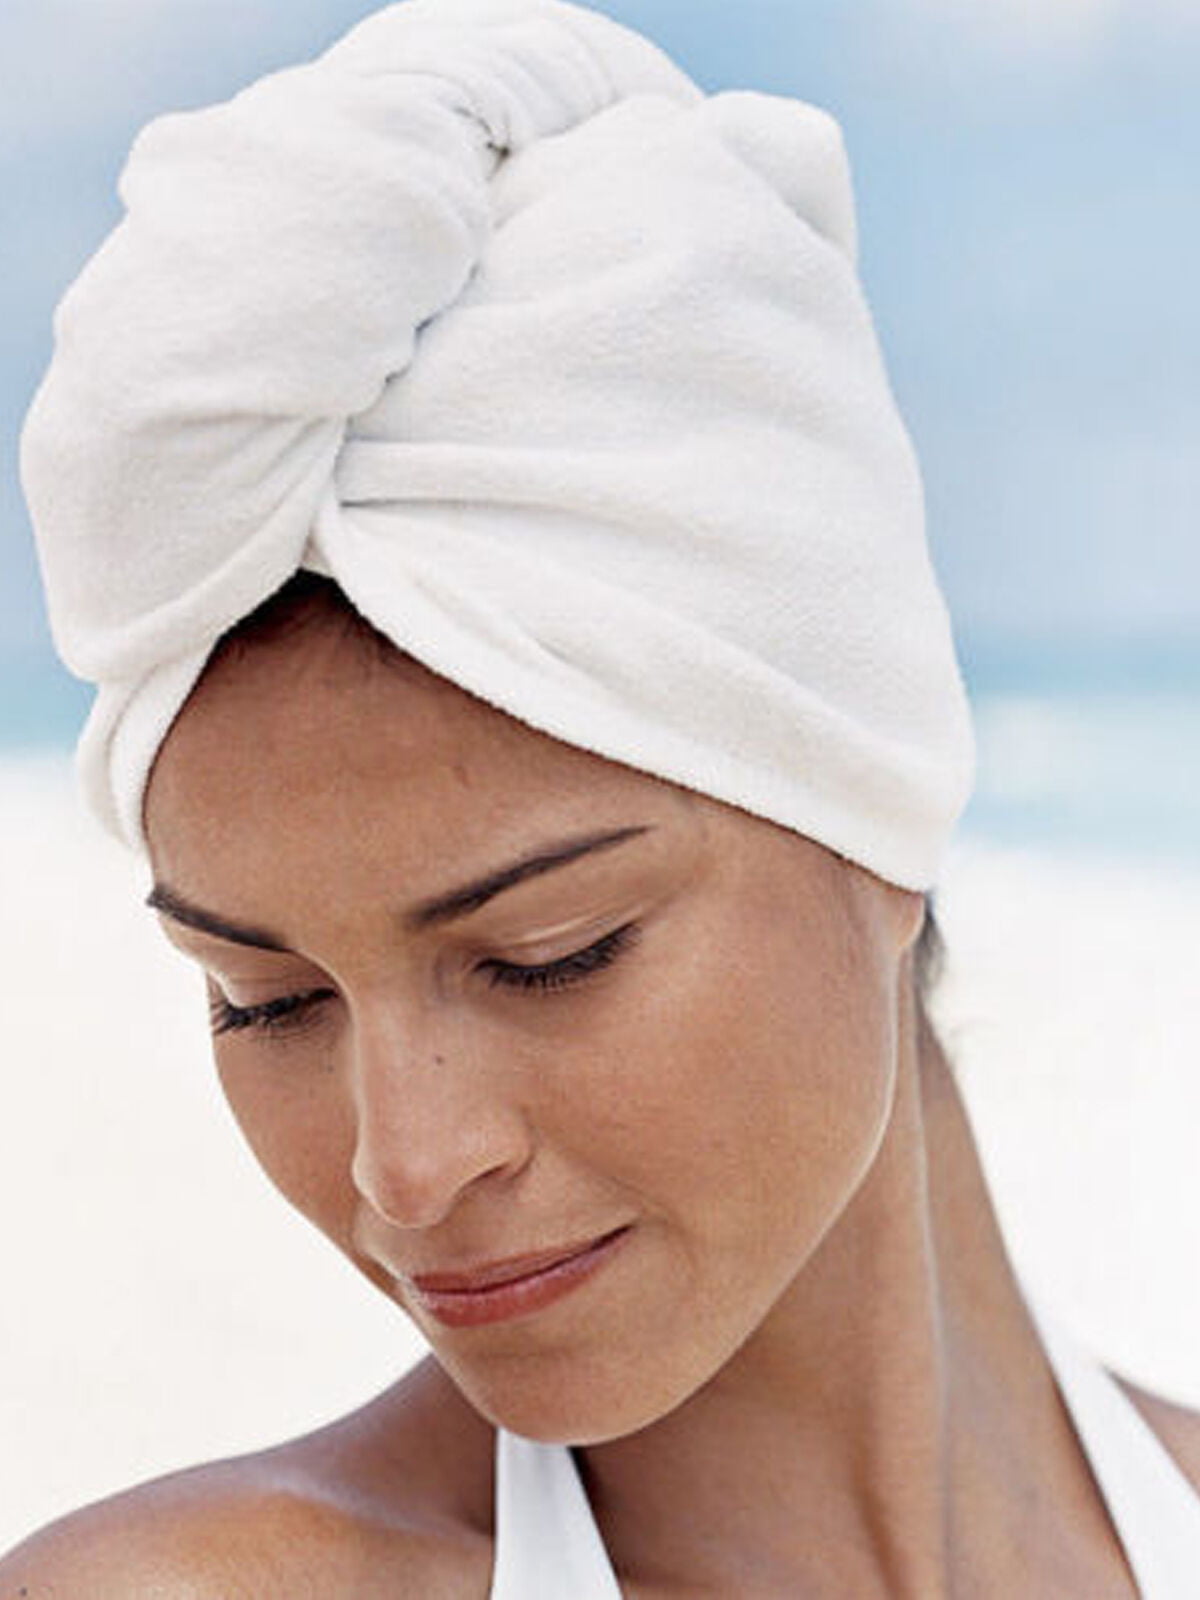 Rapid Fast Drying Hair Absorbent Towel Turban Wrap Soft Shower Bath Cap Hat 